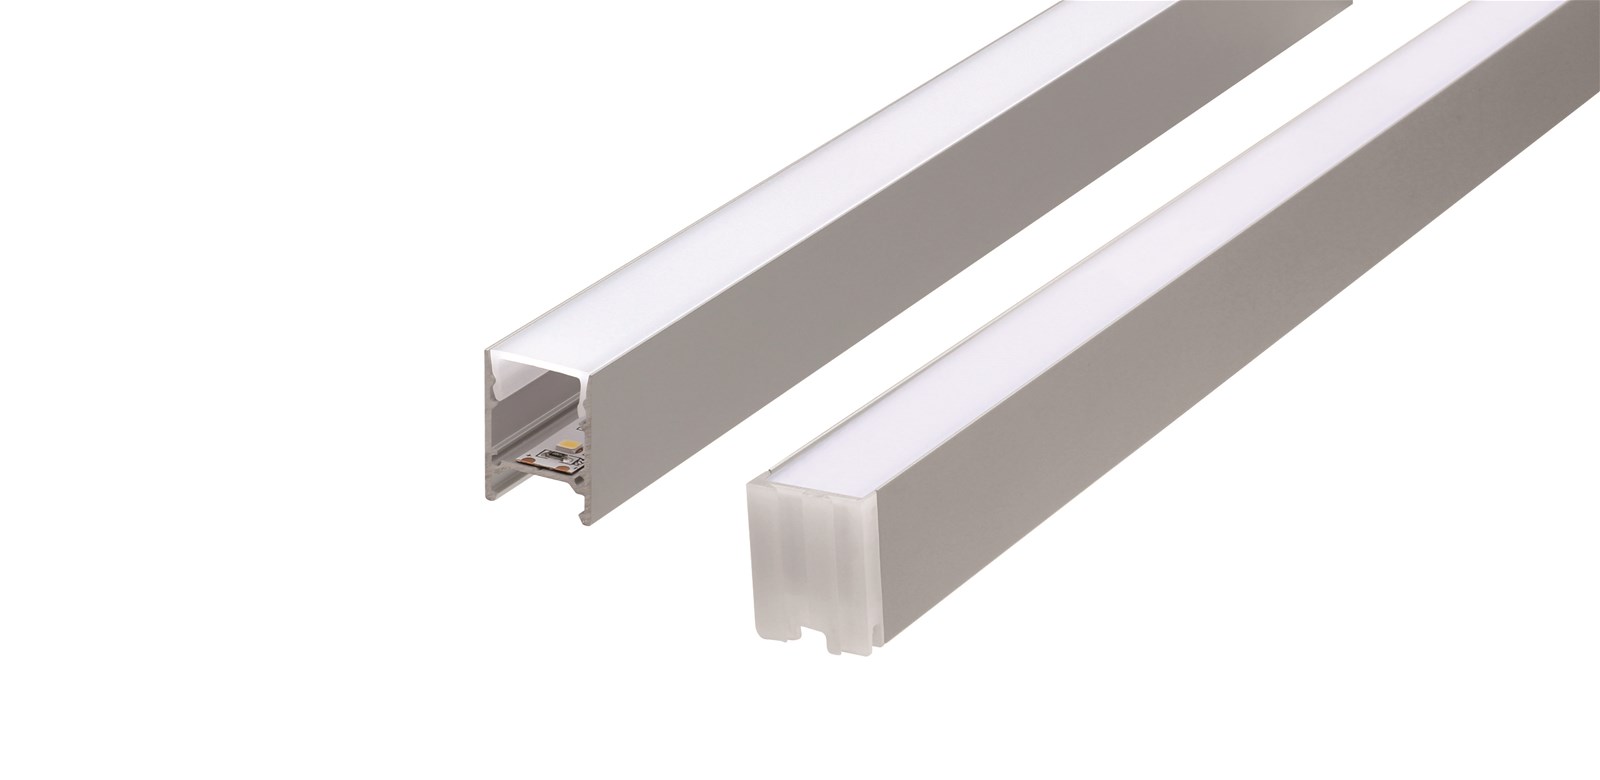 LED linear lamp slot Black aluminum profile ceiling embedded aluminum with slot card